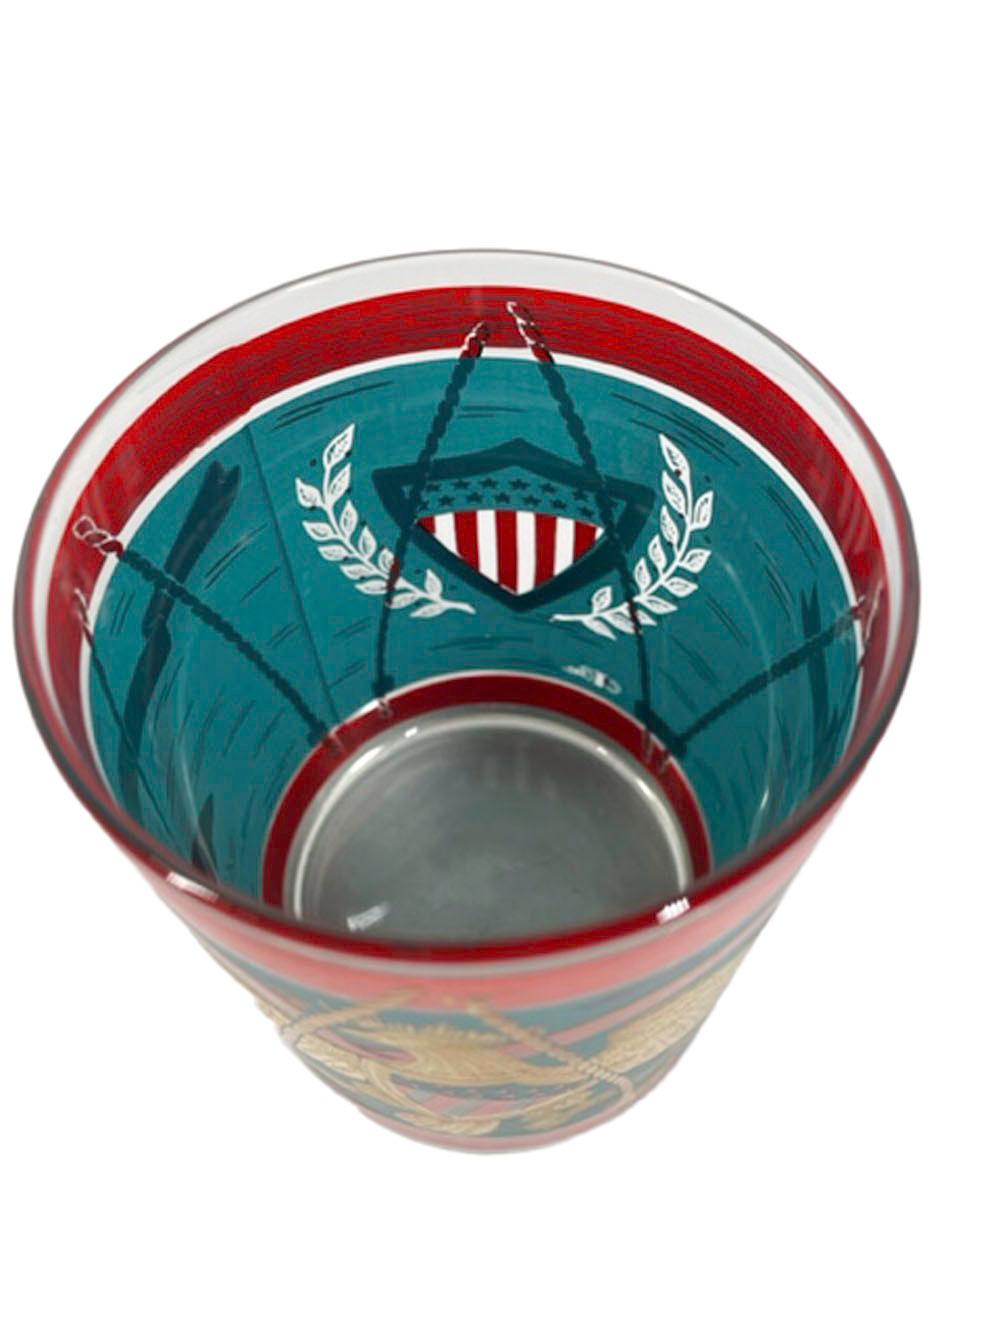 Vintage Cera Glassware Rocks Glasses in Teal and Red Drum Pattern w/Gold Eagle 1